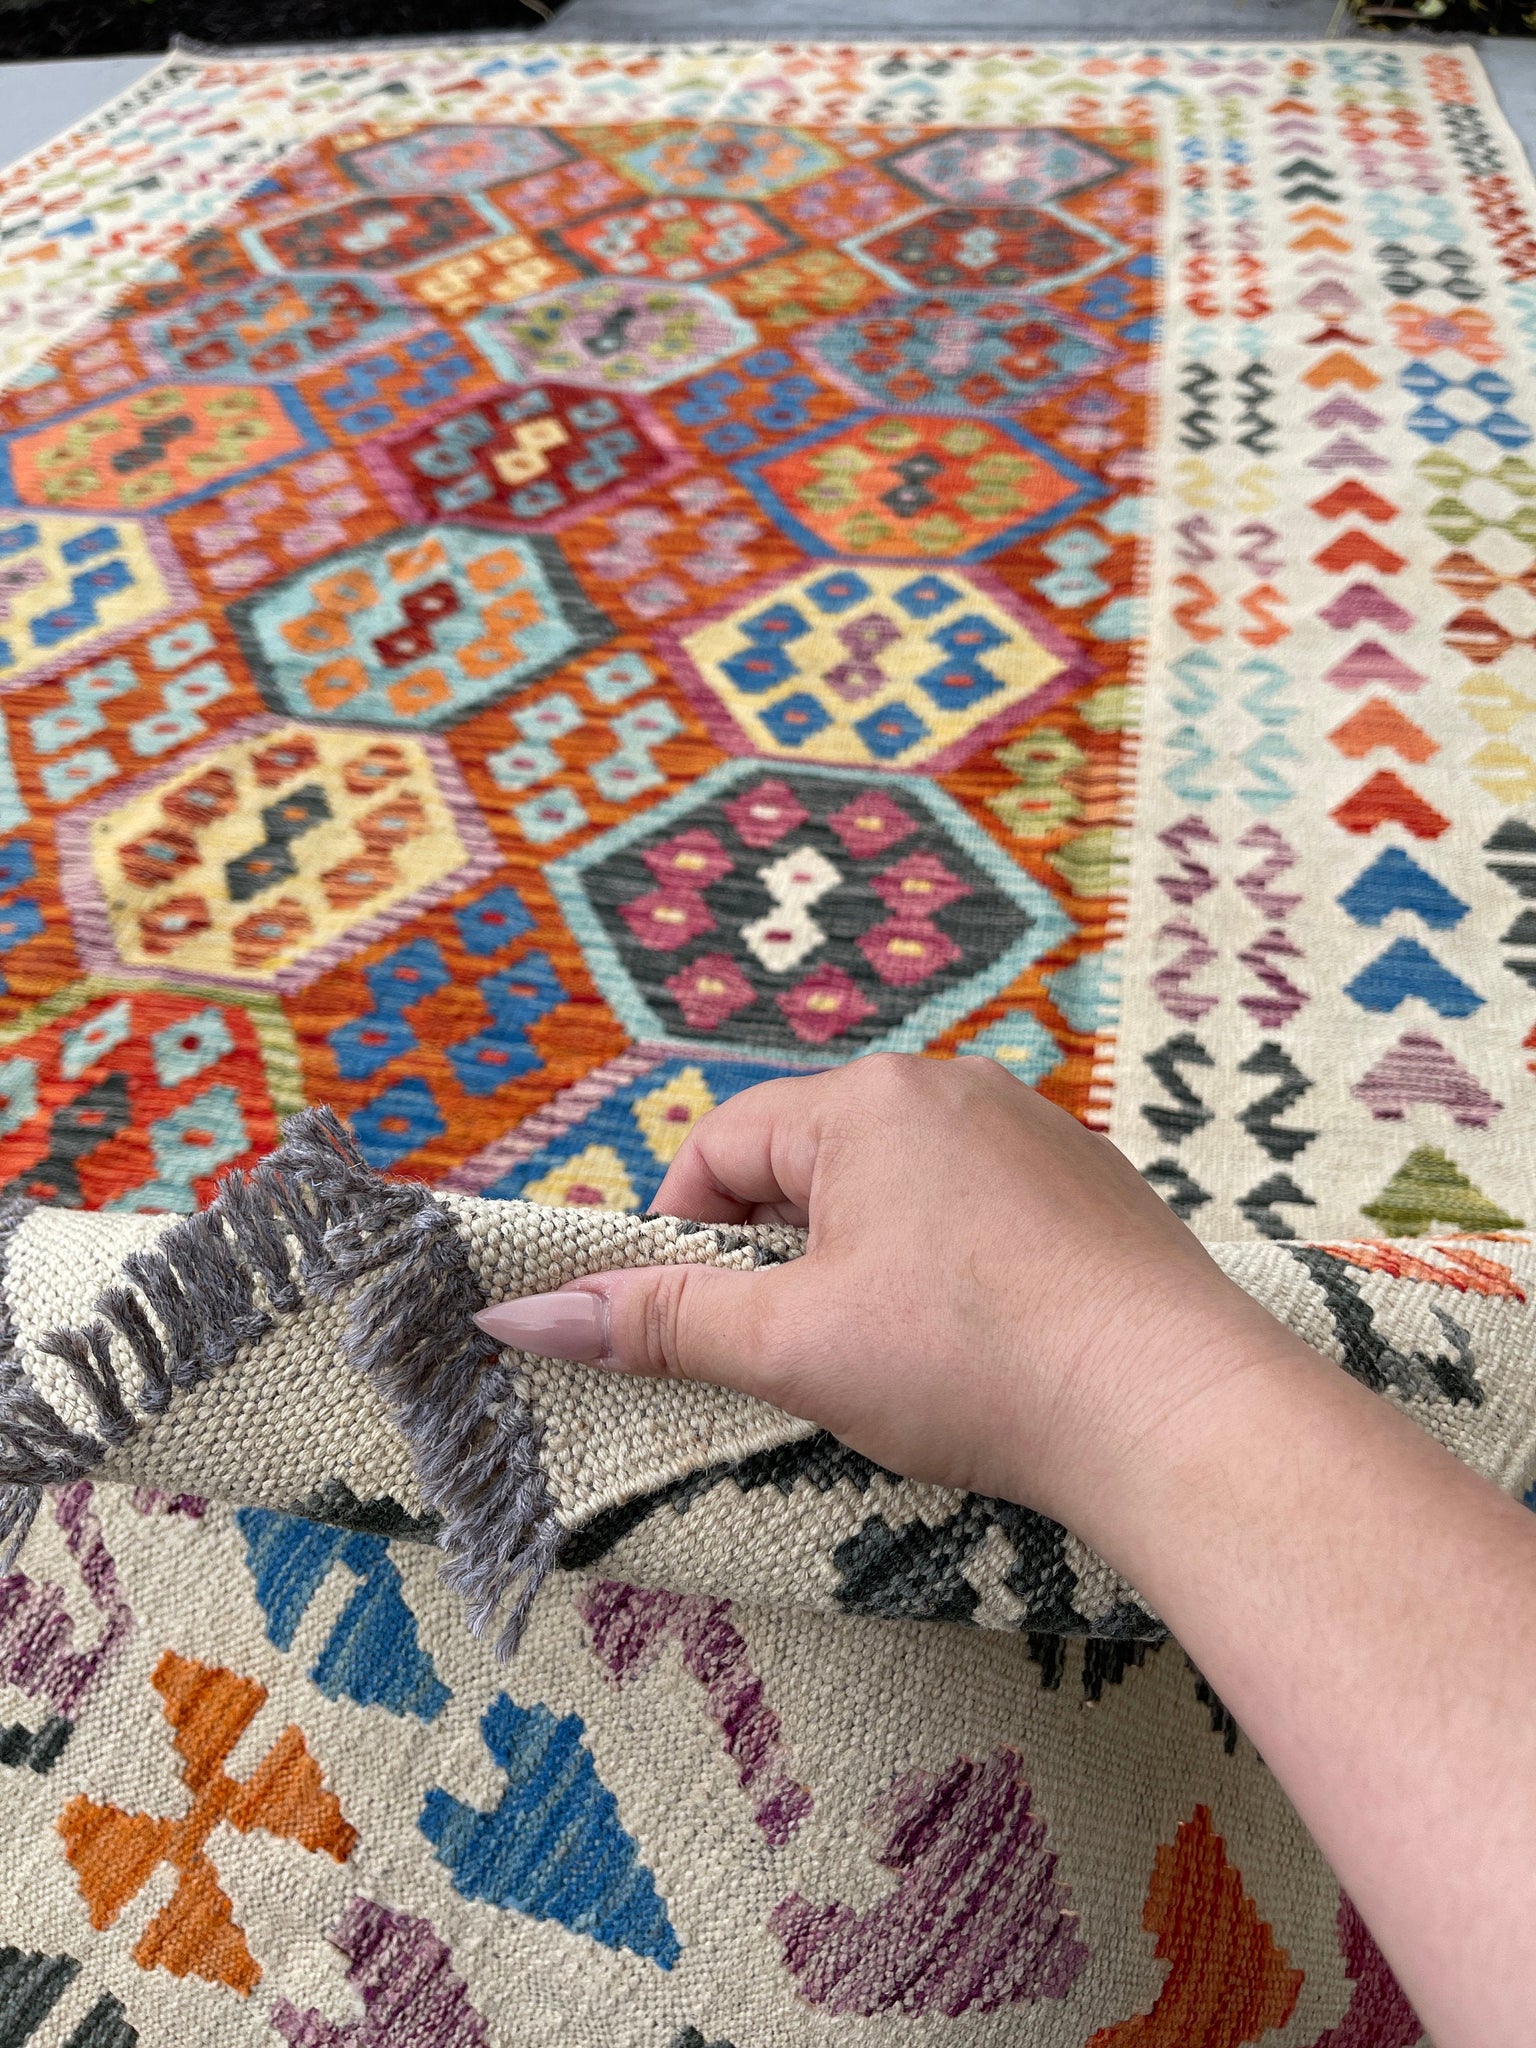 6x10 (180x305) Handmade Afghan Kilim Flatweave Rug | Ivory Cream Orange Colorful | Boho Tribal Moroccan Outdoor Wool Knotted Flatweave